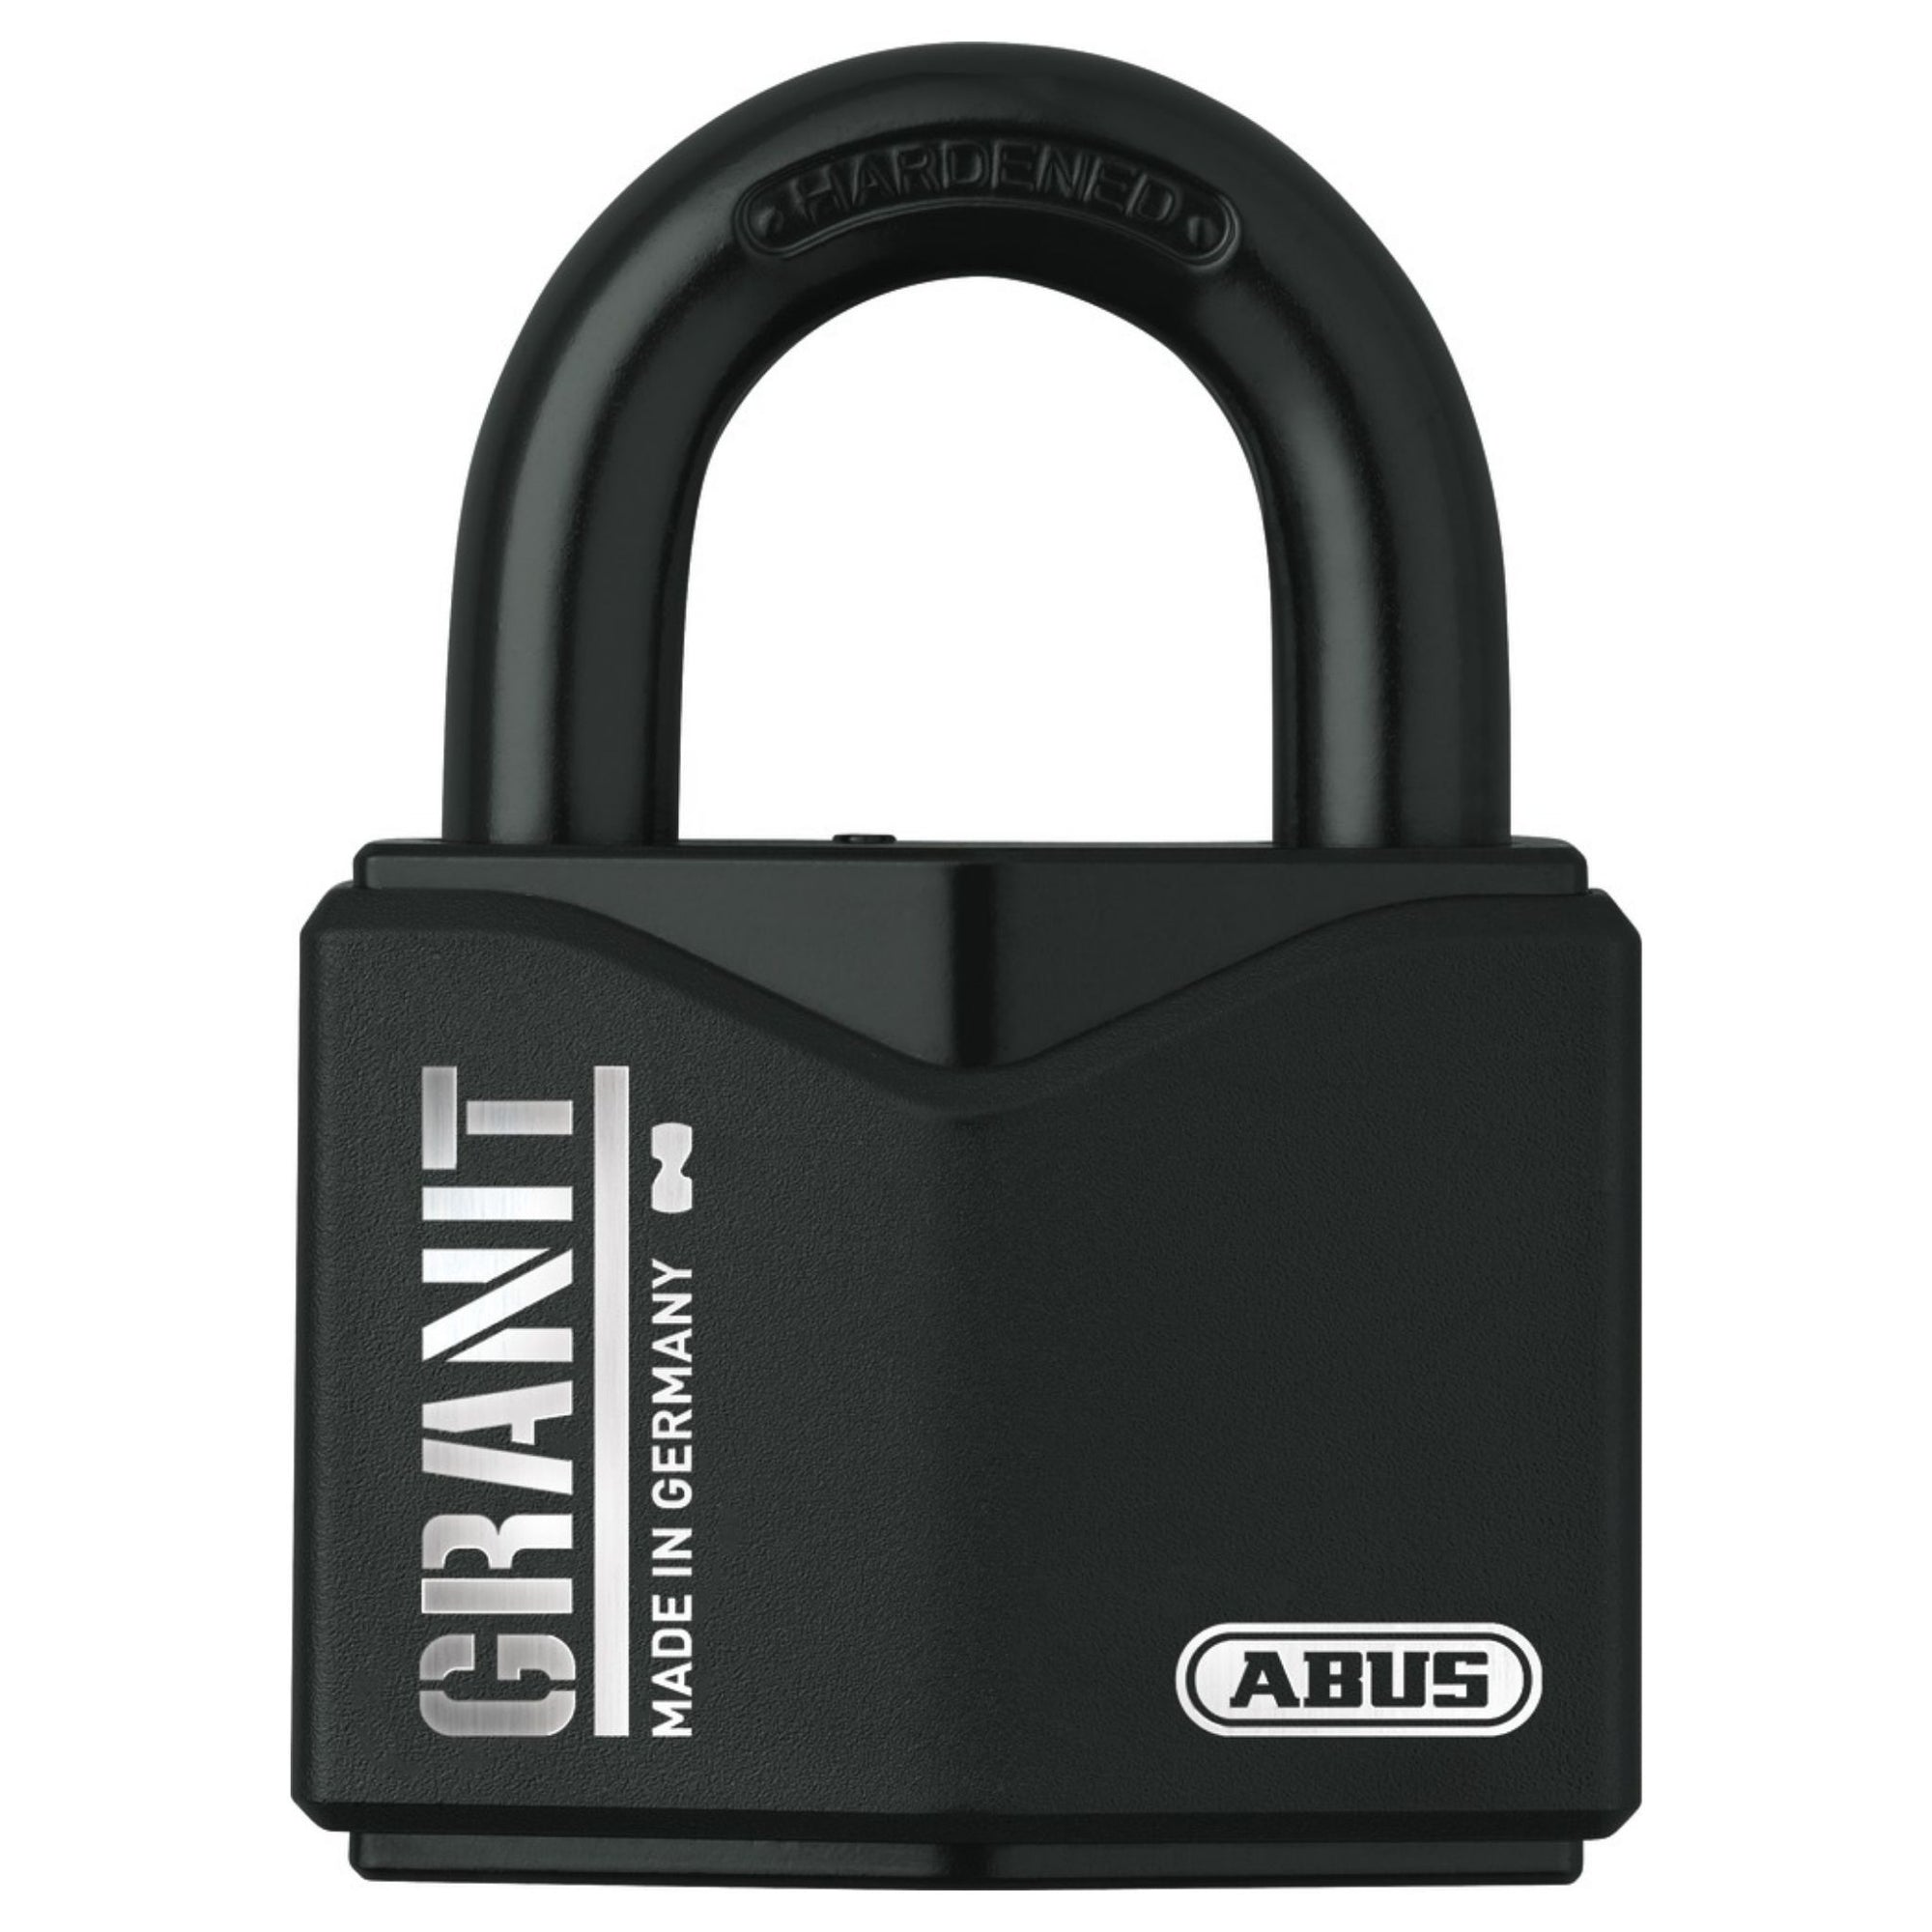 Abus 37RK/55 KA 4346523 Granit Lock Keyed Alike Black Granite Padlocks Matched to Existing Key# KA4346523 - The Lock Source